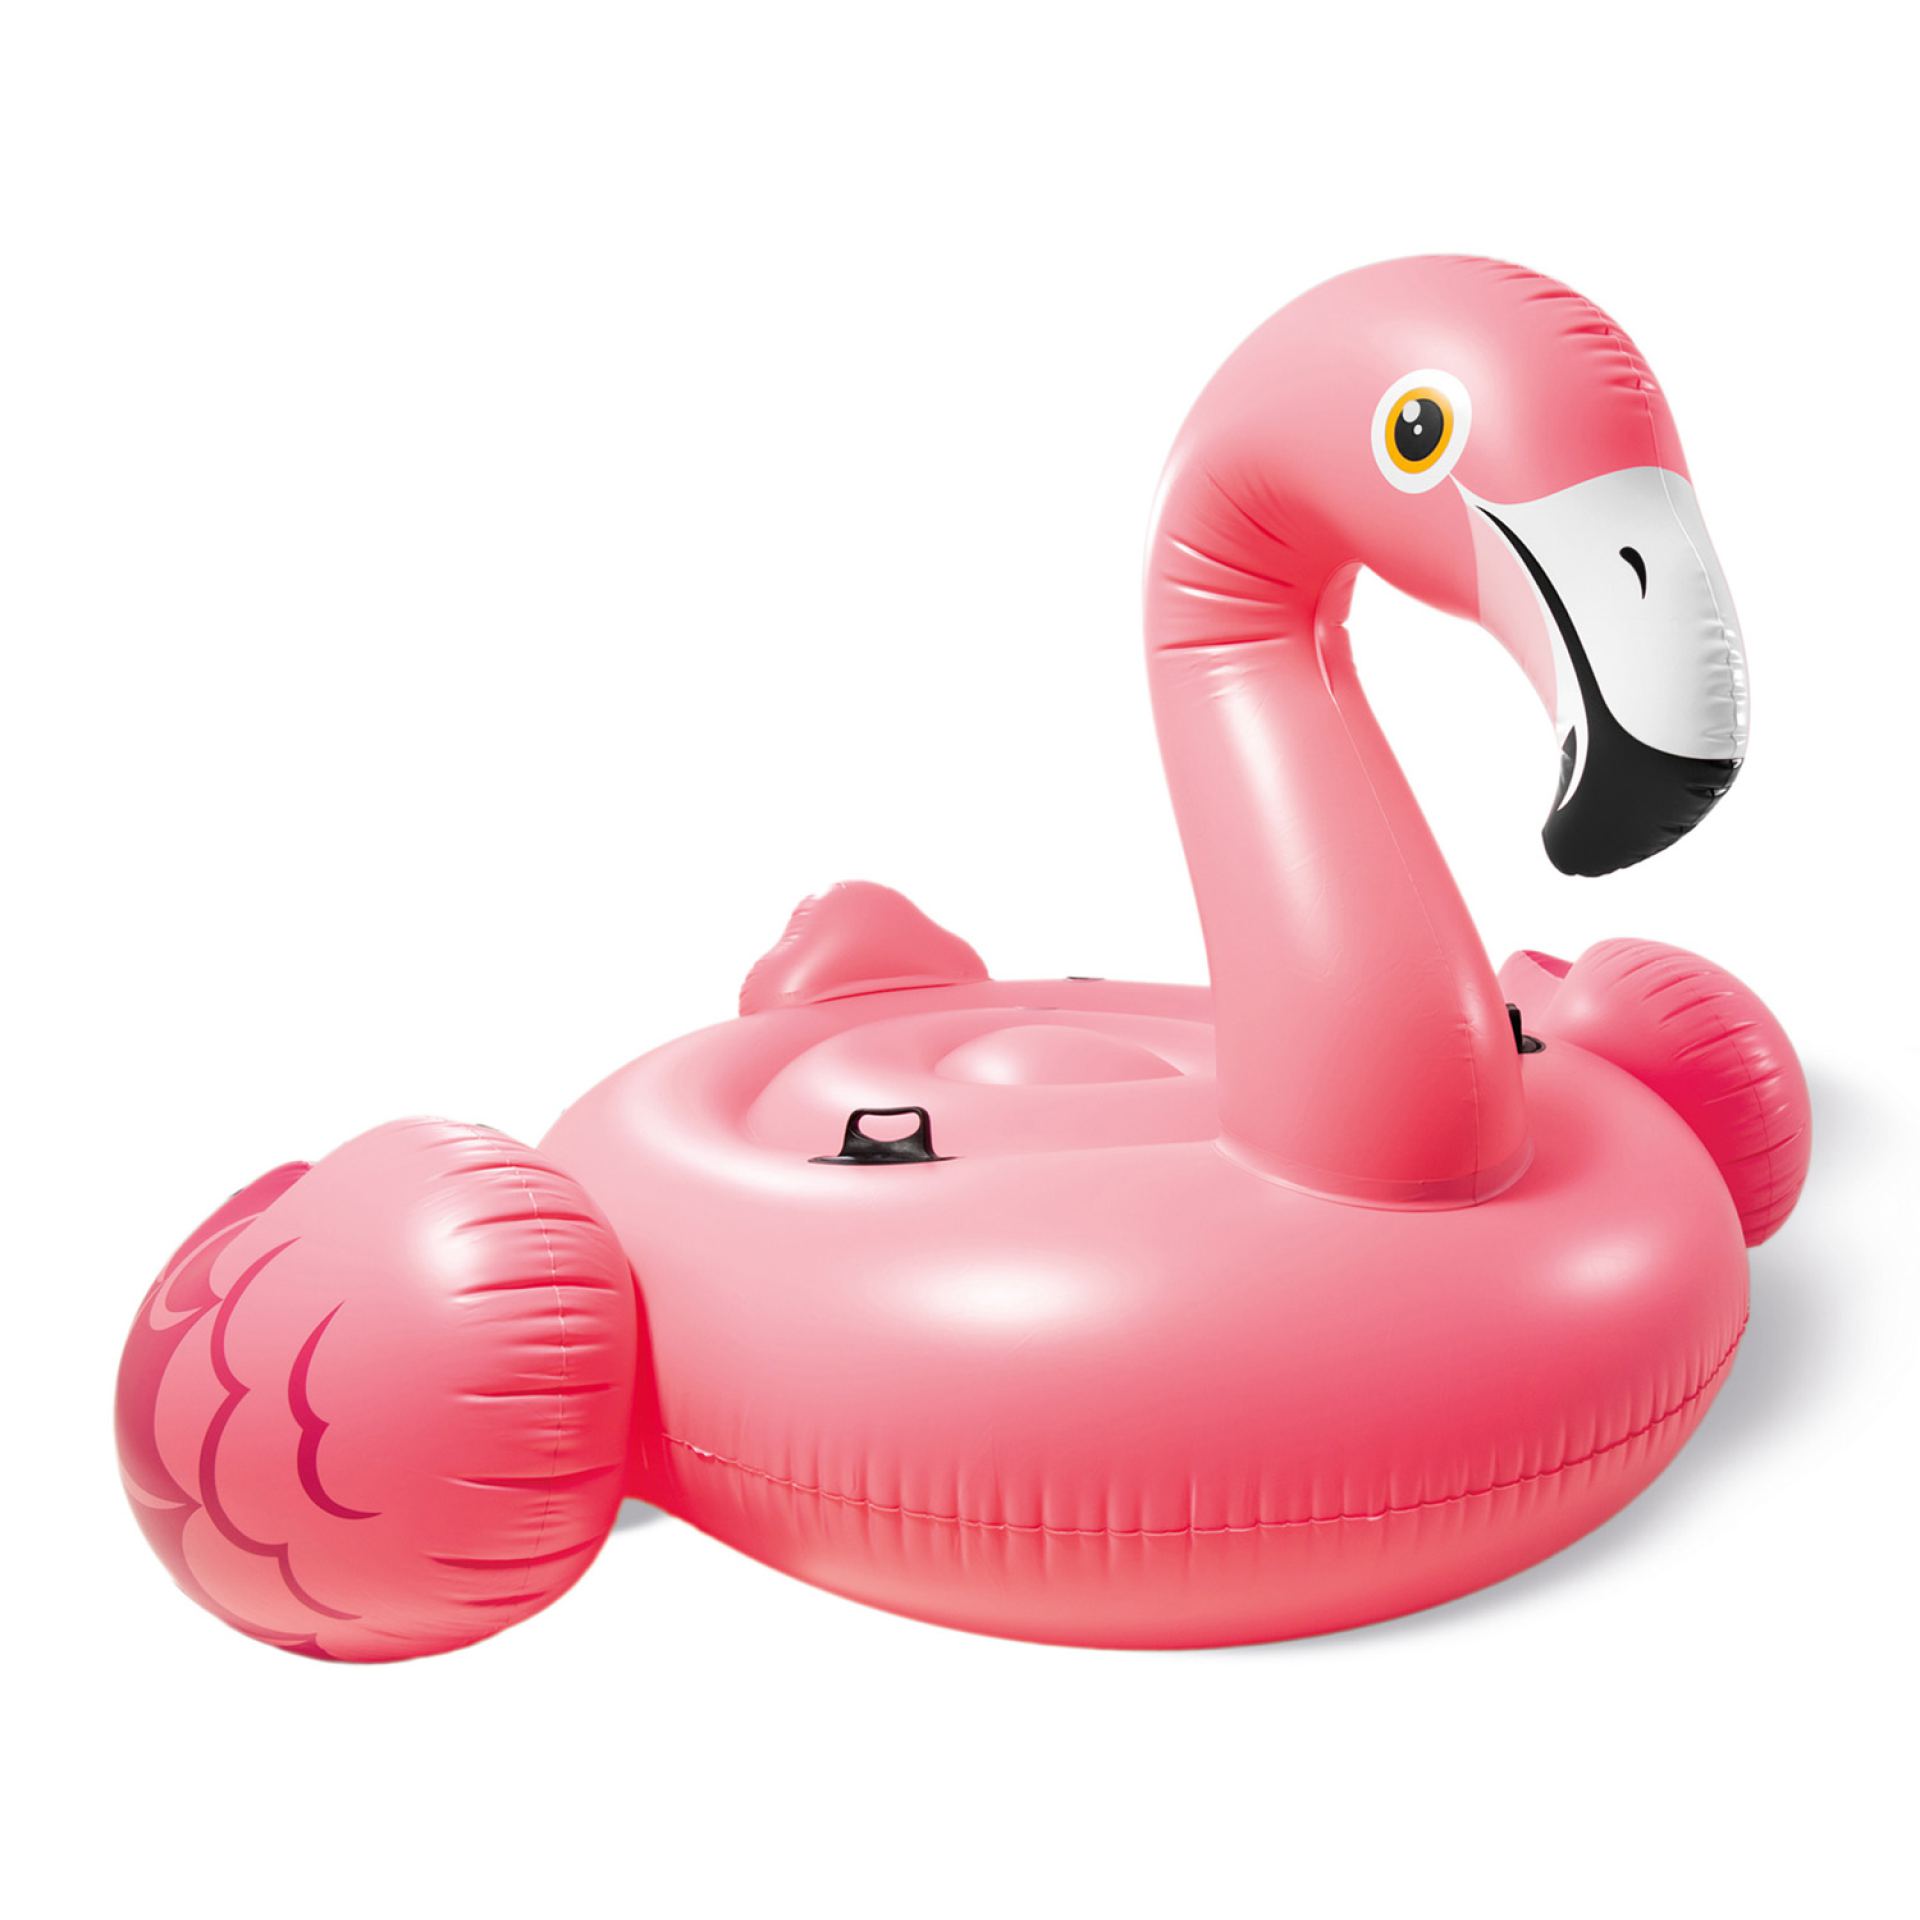 Intex mega flamingo island online kopen